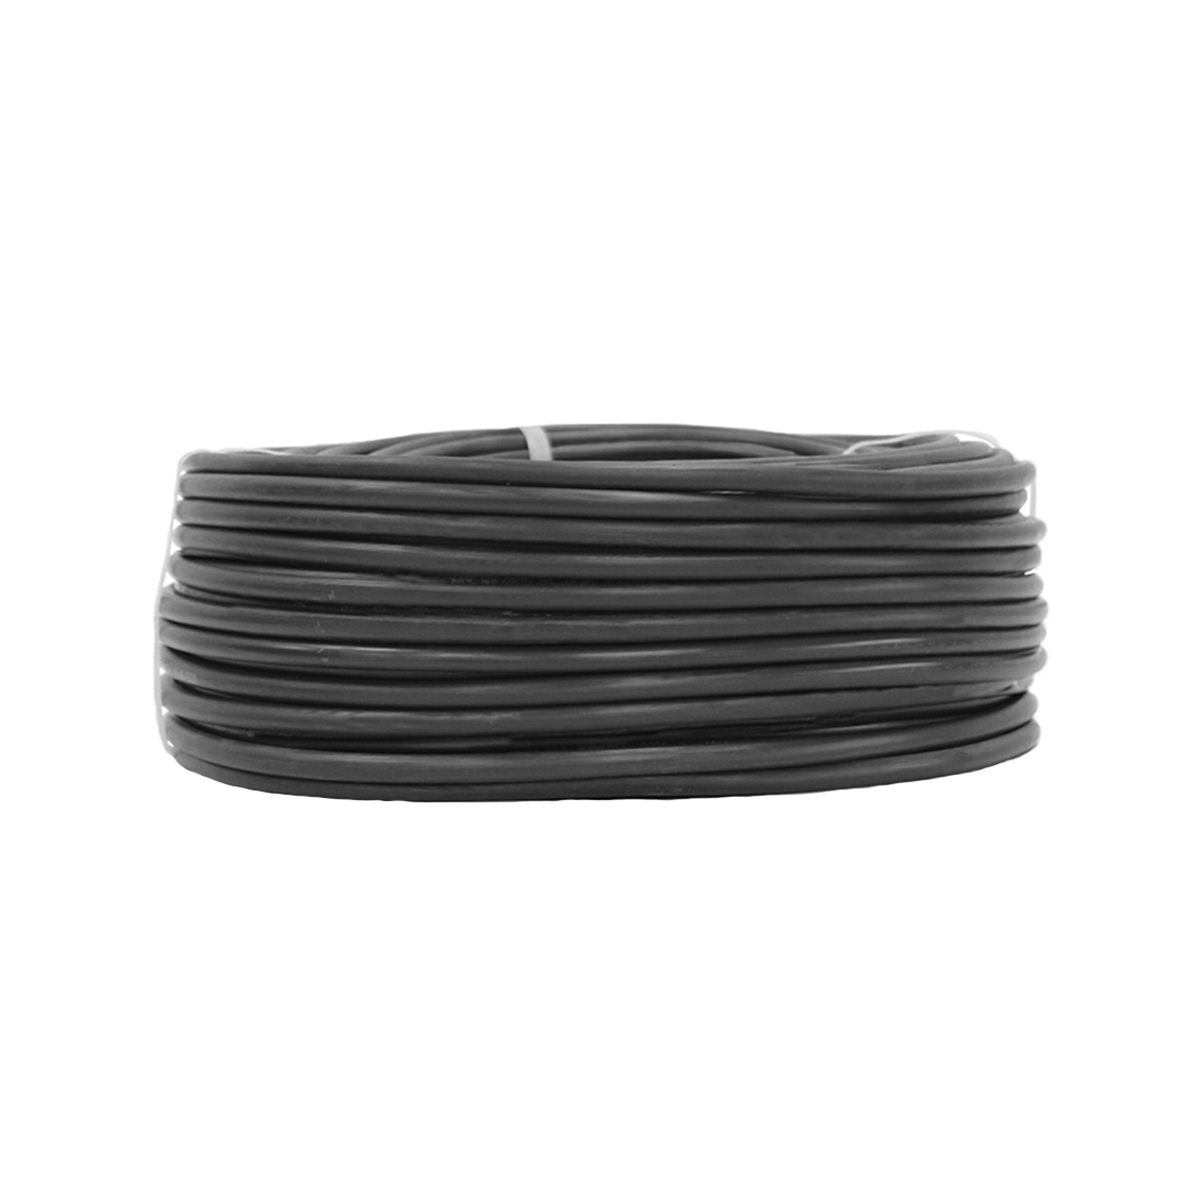 CONDUMEX Cable D/uso Rudo 600v 4x14 Awg Cx-ur-600-4x14